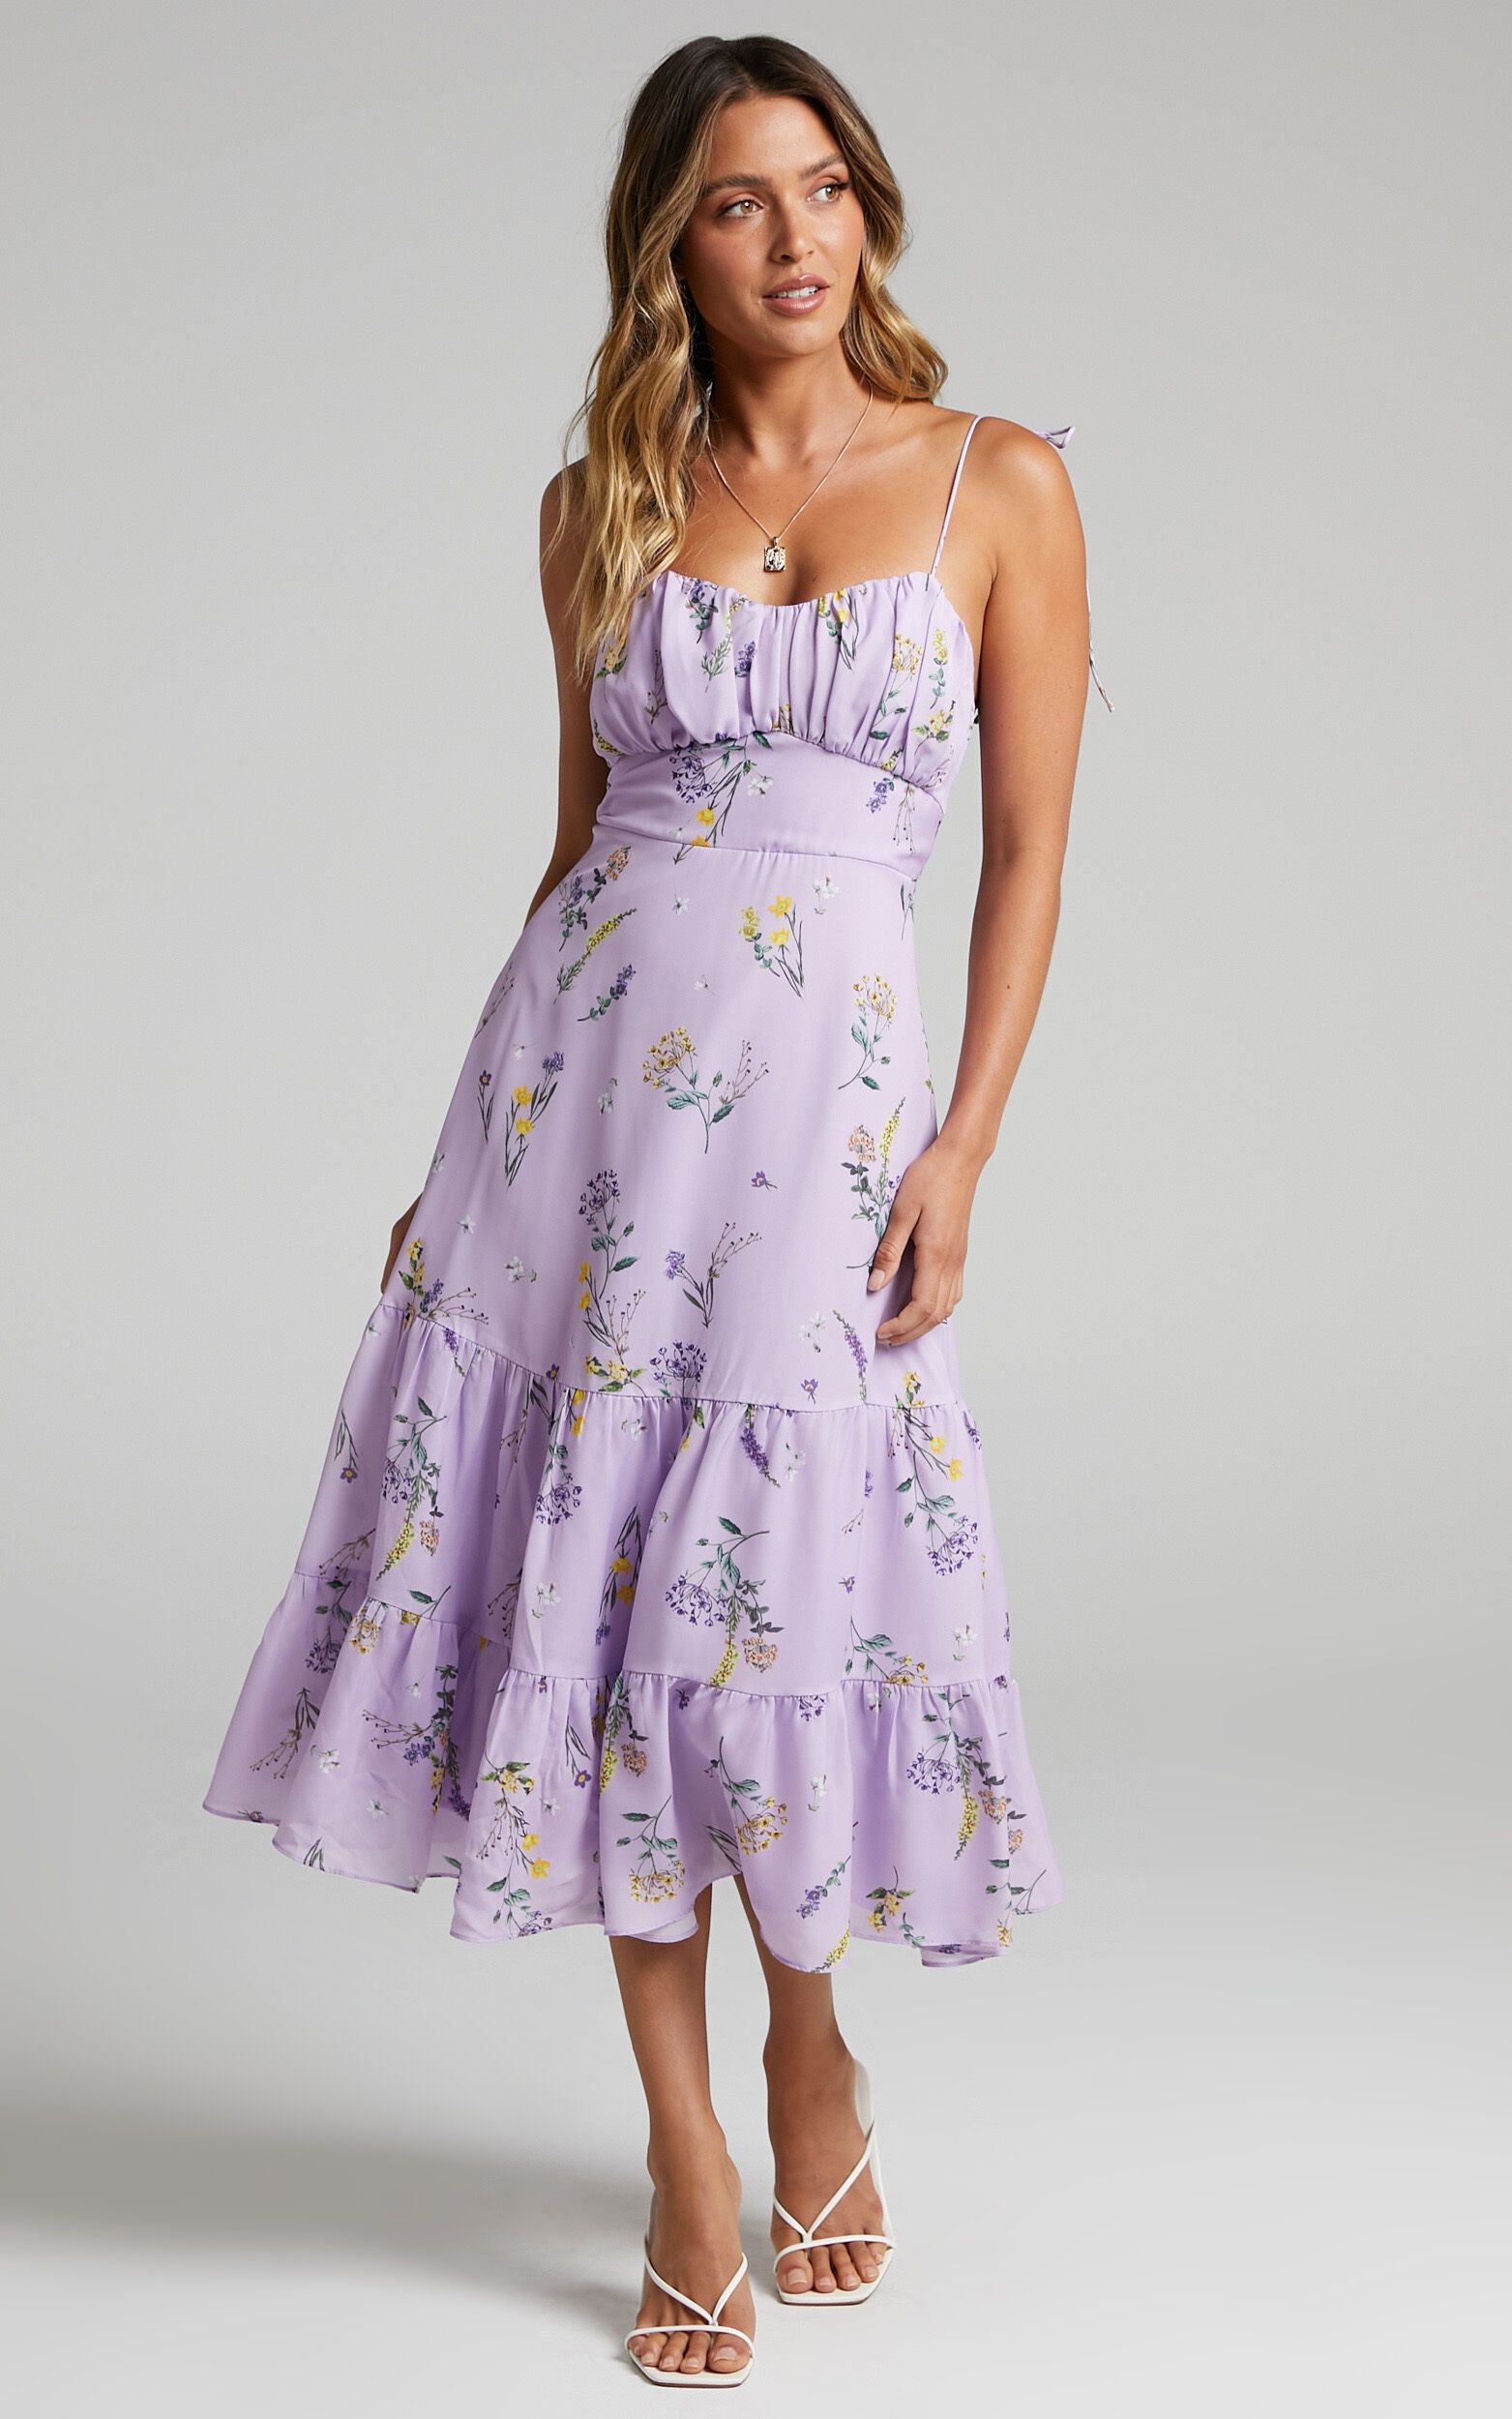 Monaco Sweetheart Midi Dress in Lavender Botanical Floral | Showpo (ANZ)